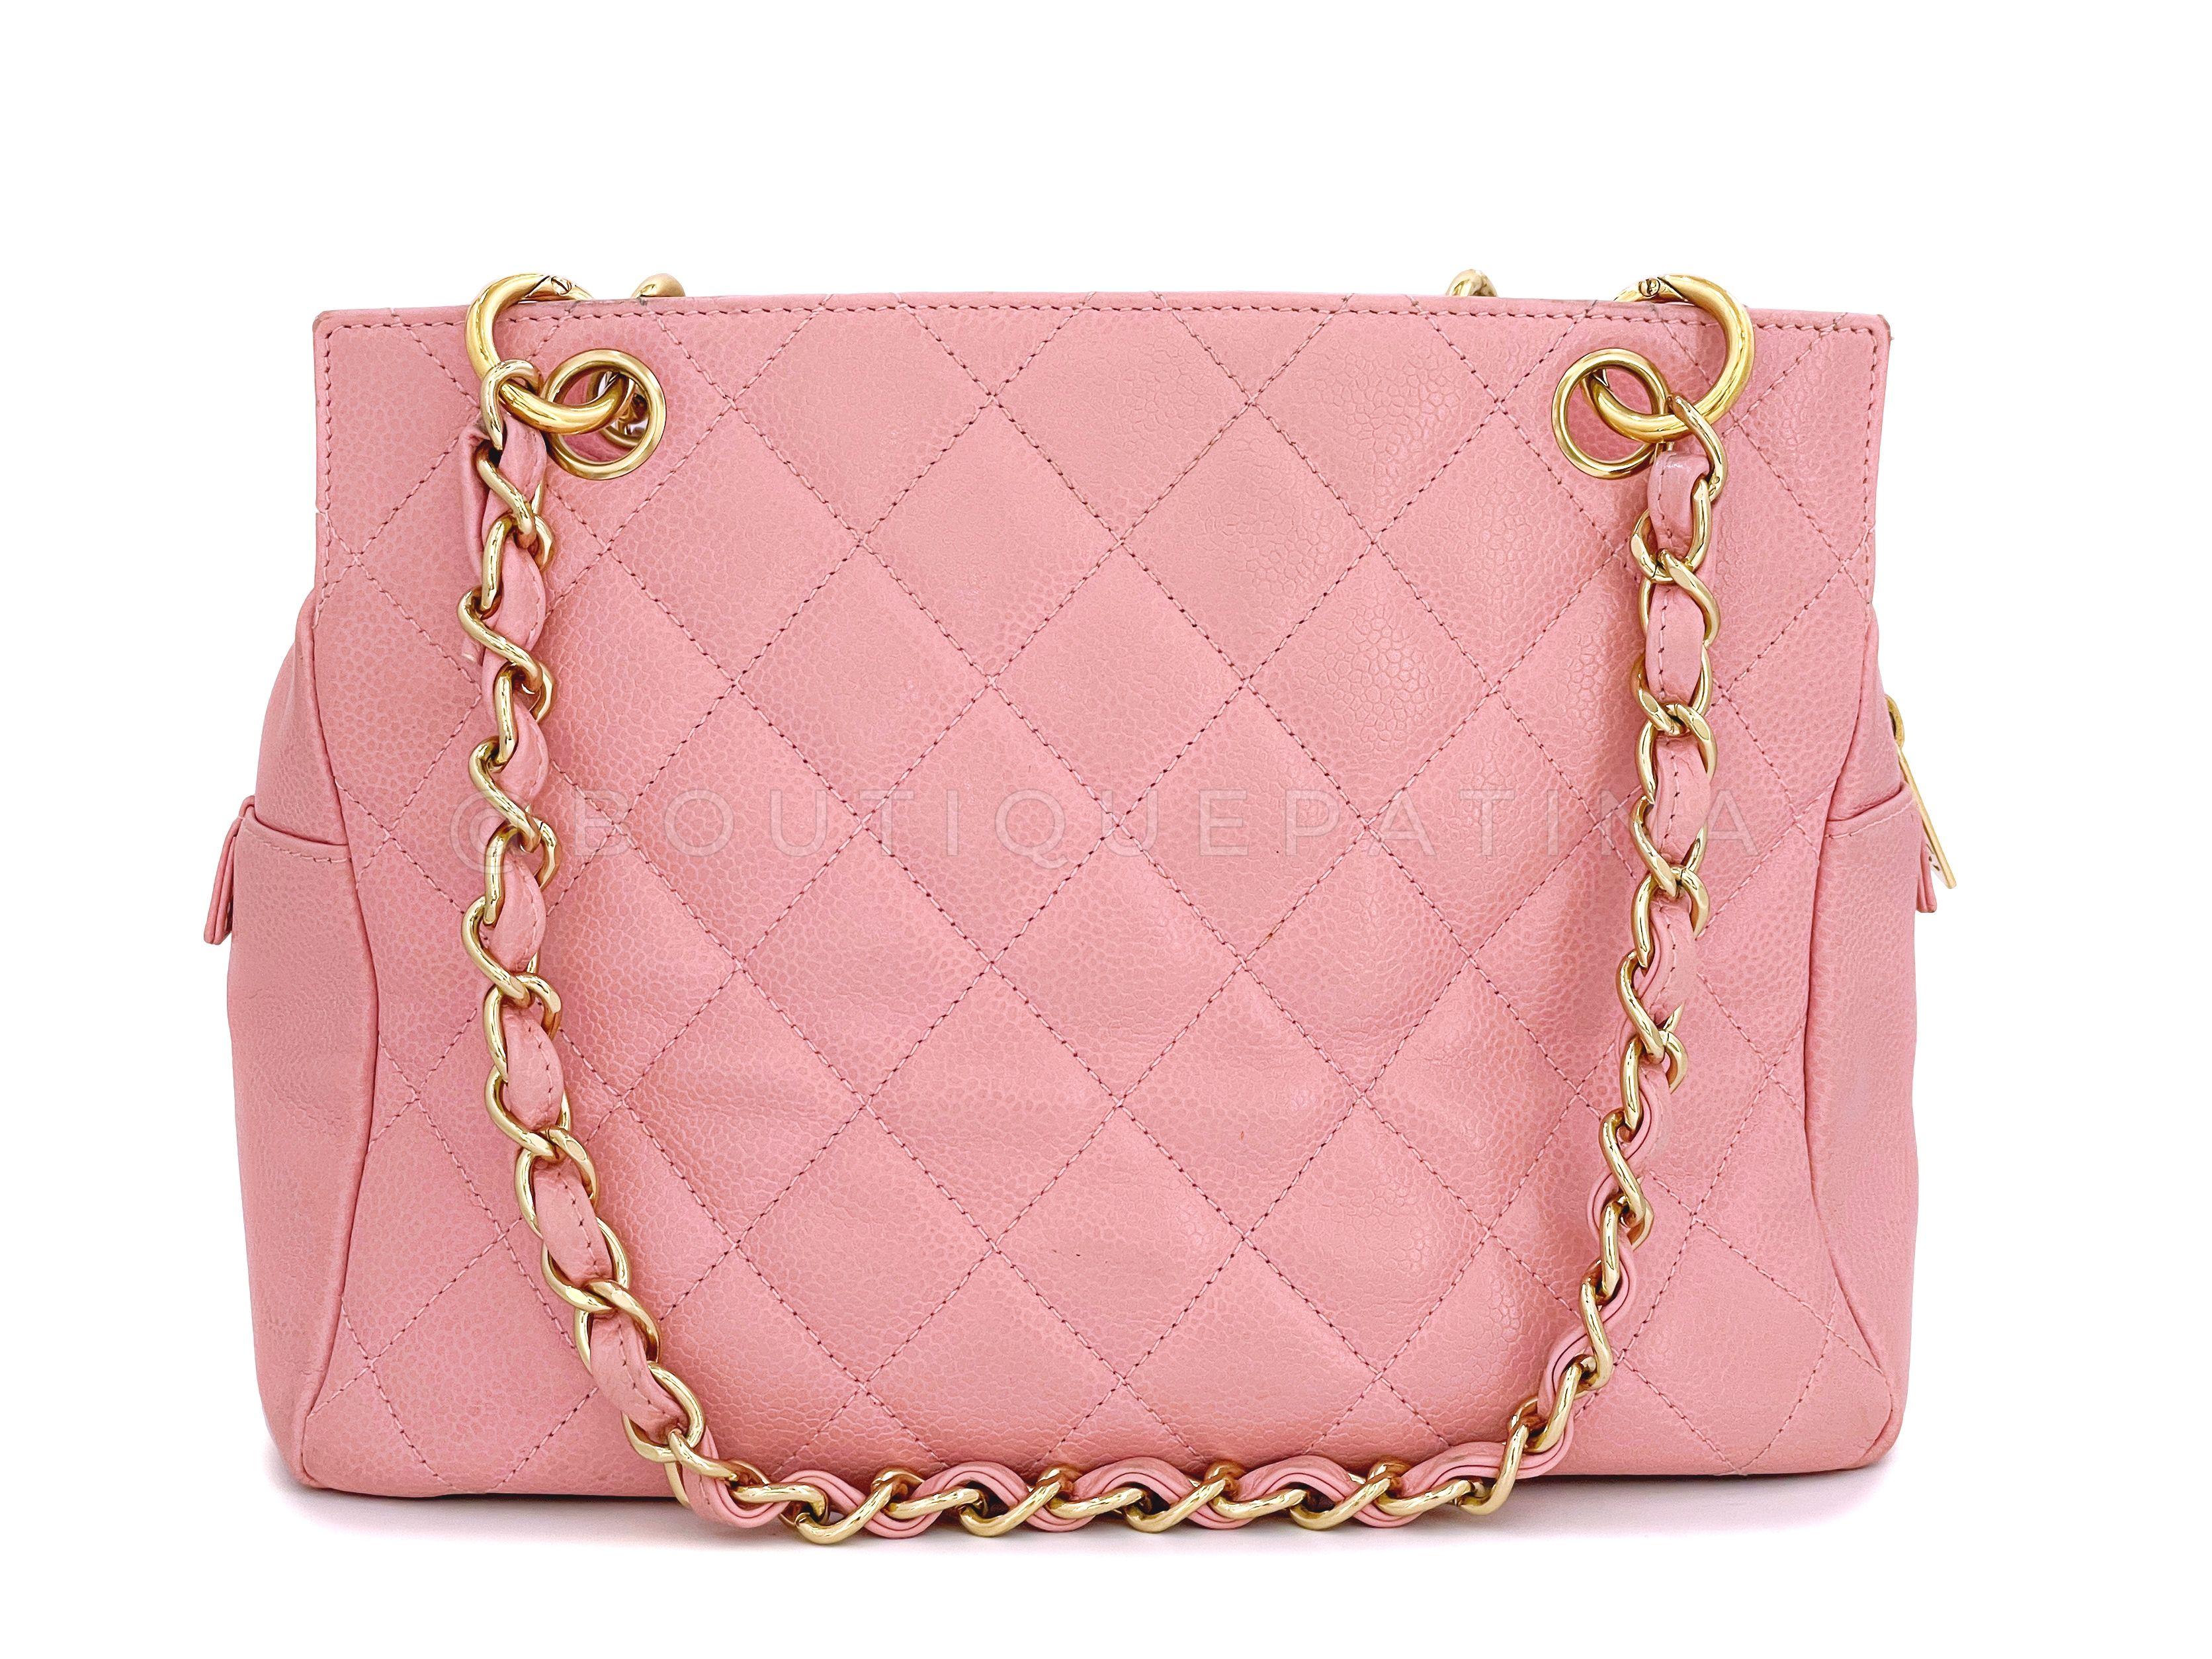 Women's Chanel Pink Caviar Petite Timeless Shopper Tote PTT Bag 24k GHW 65400